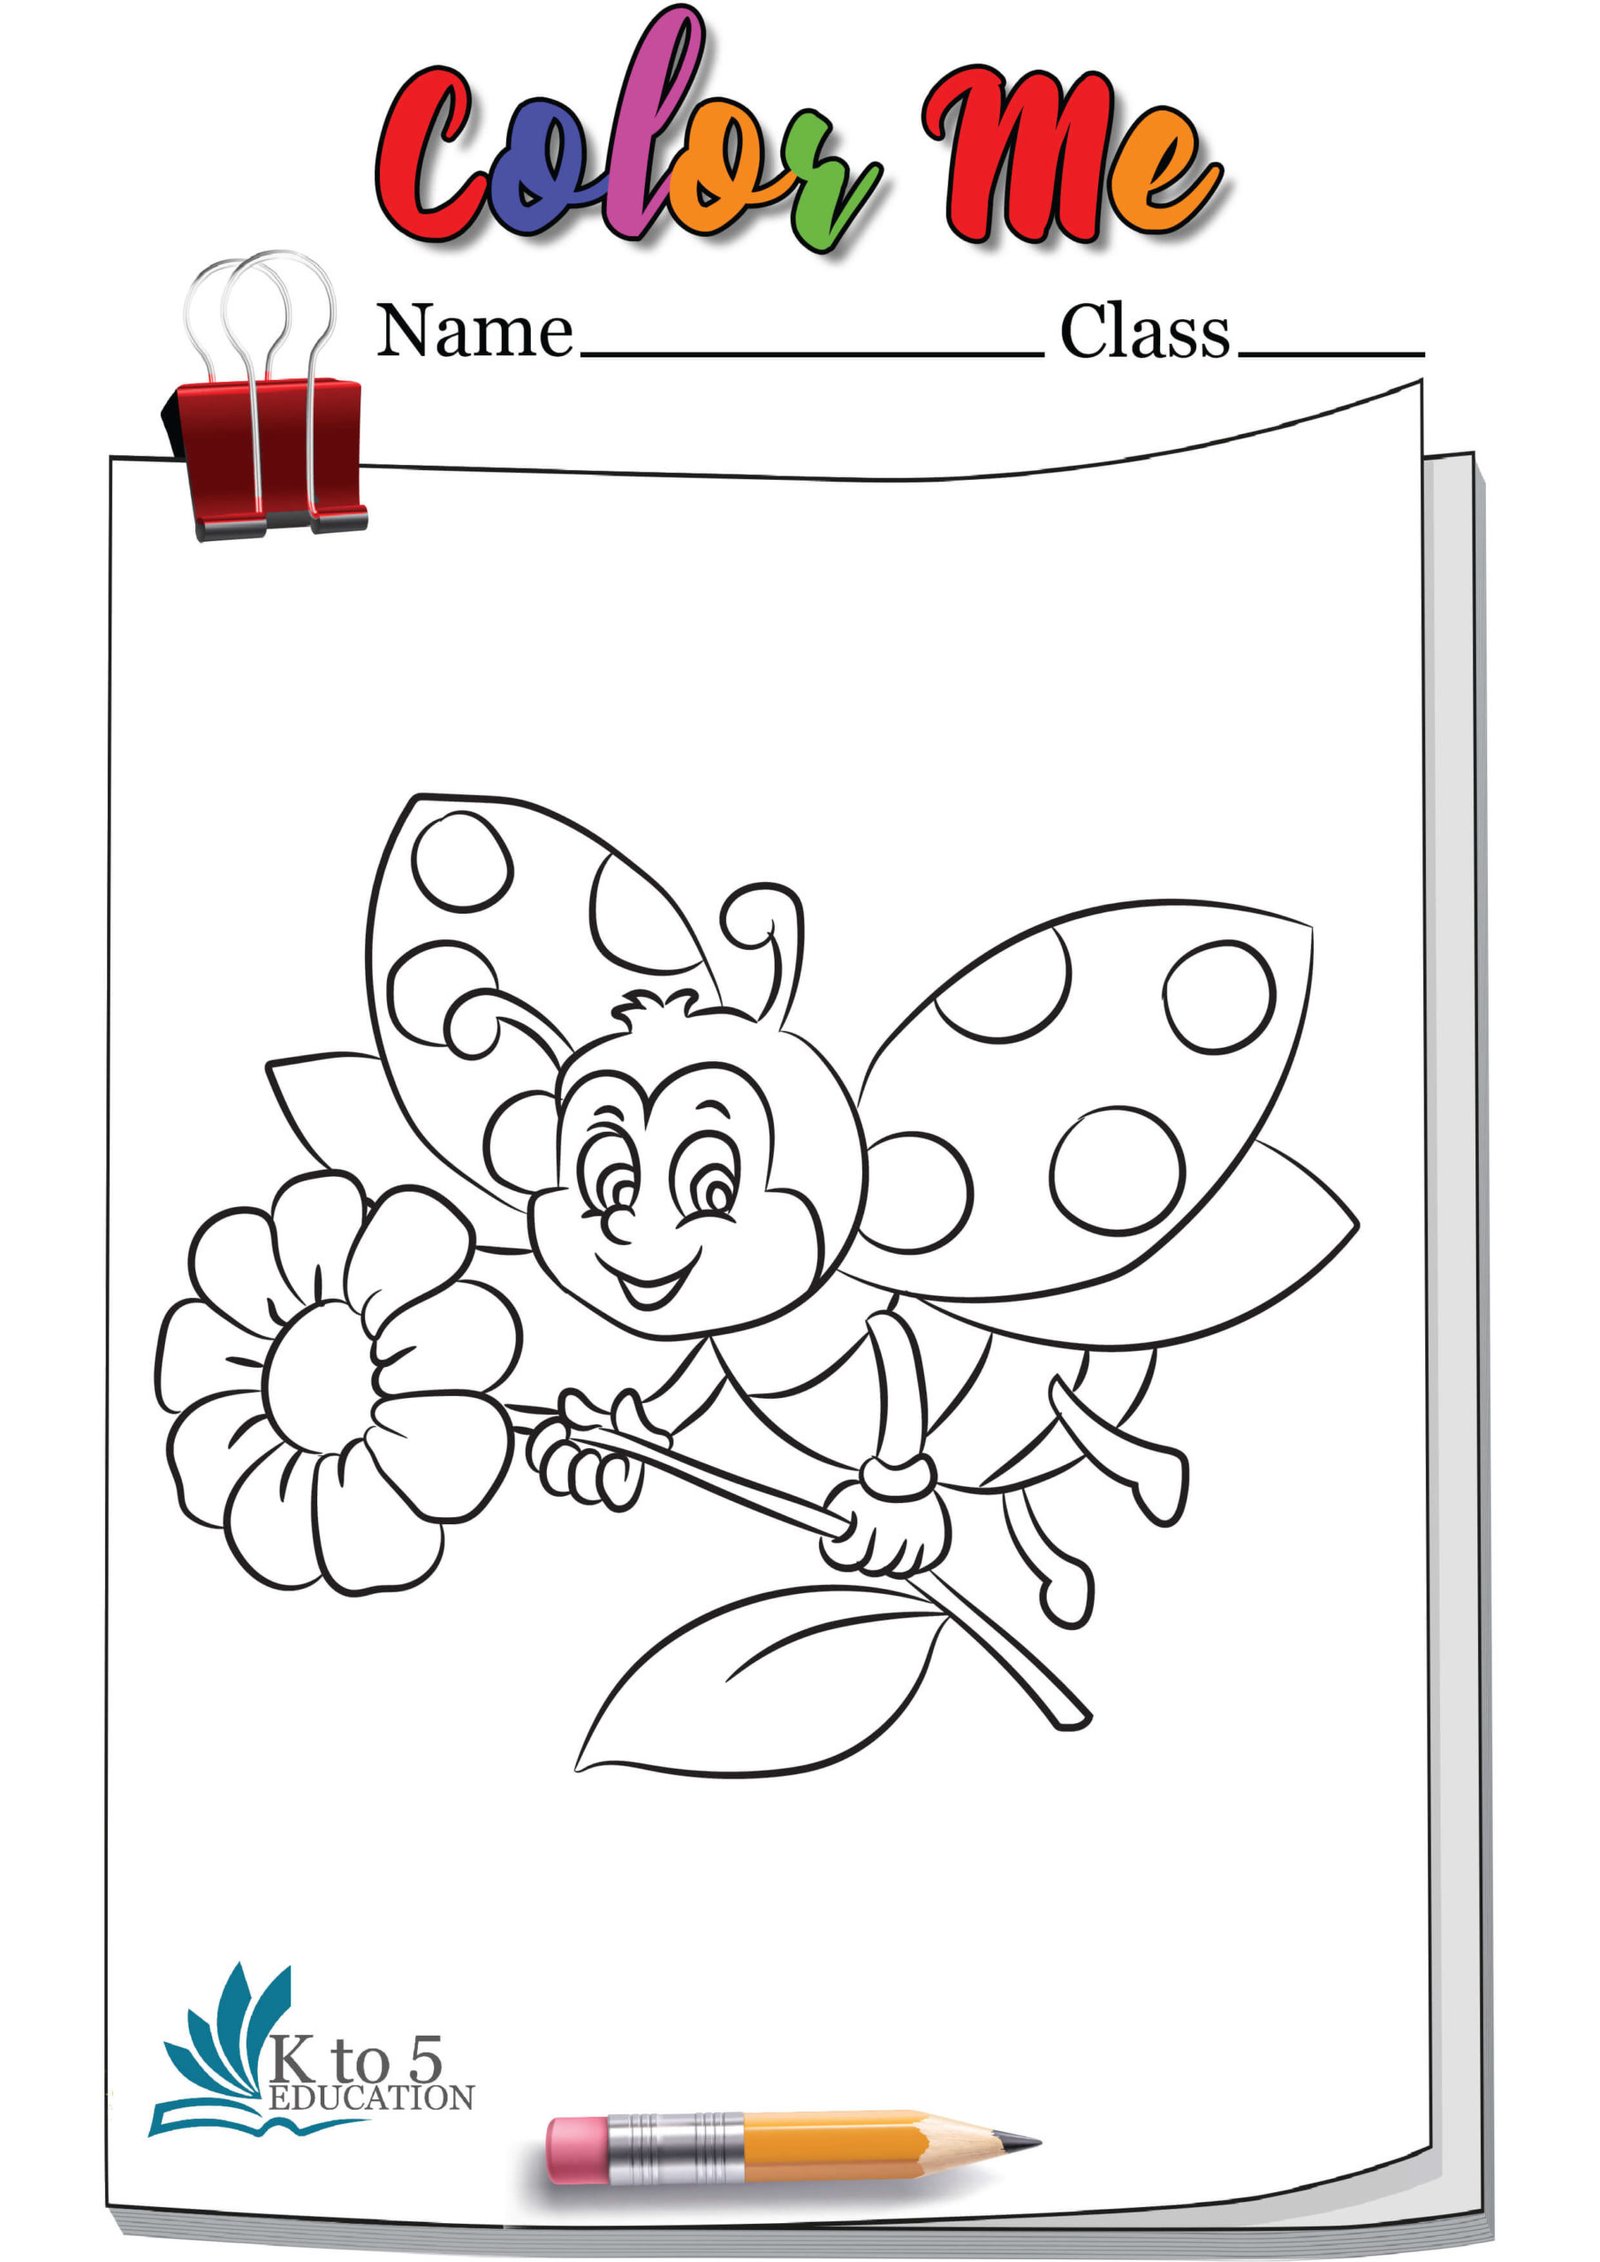 Ladybug Holding flower coloring page worksheet